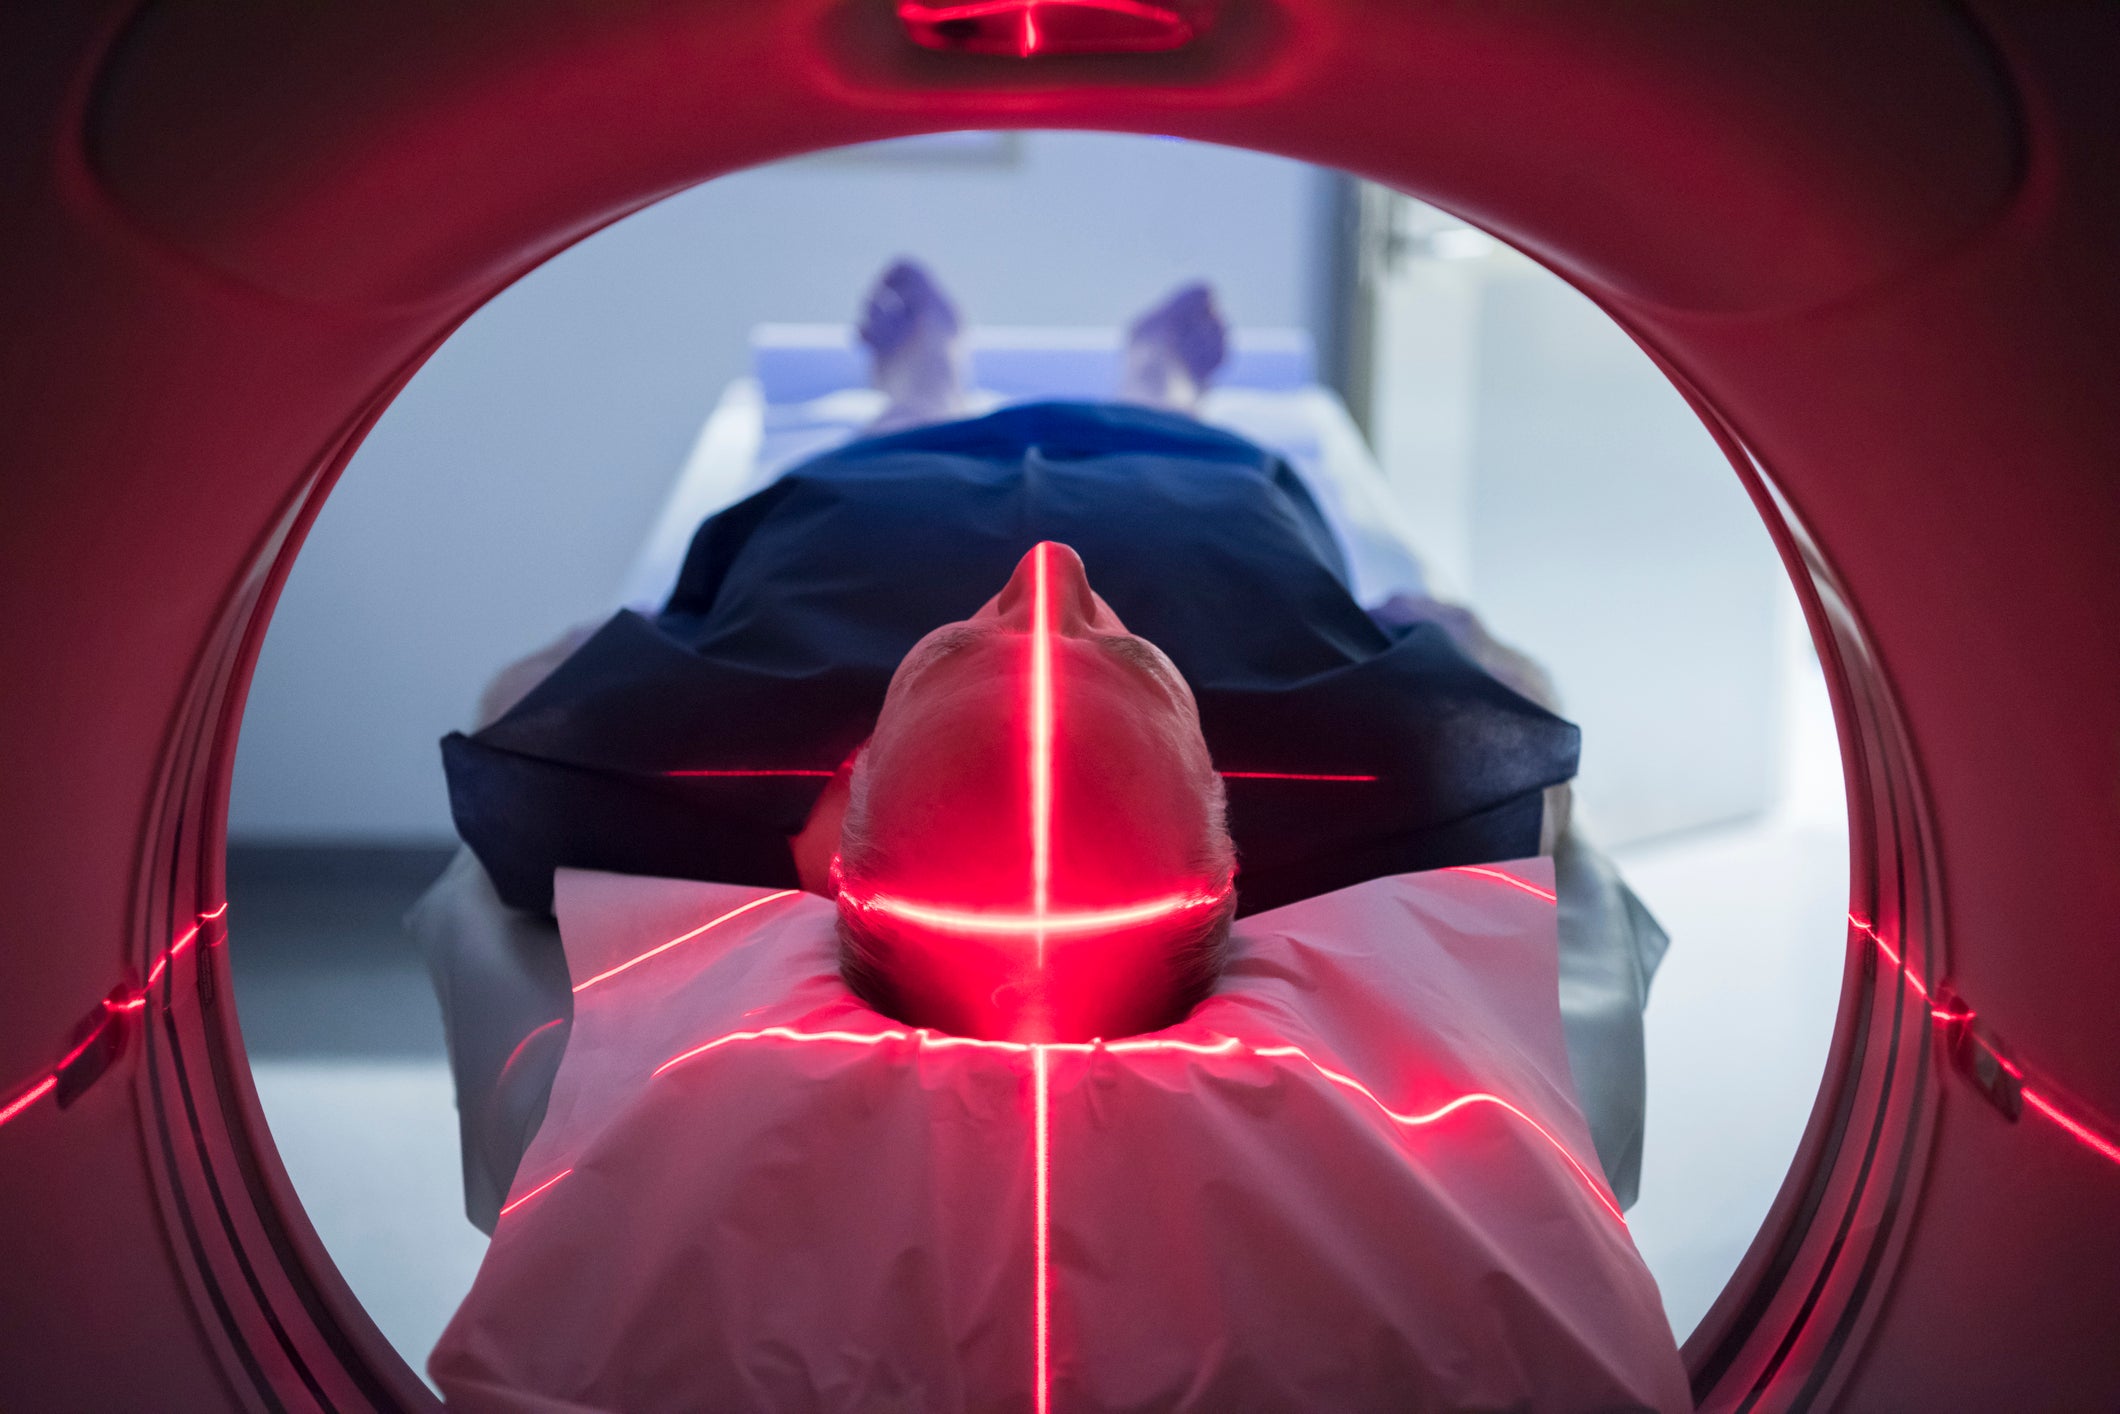 Representational: Brain activity being monitored by an MRI machine